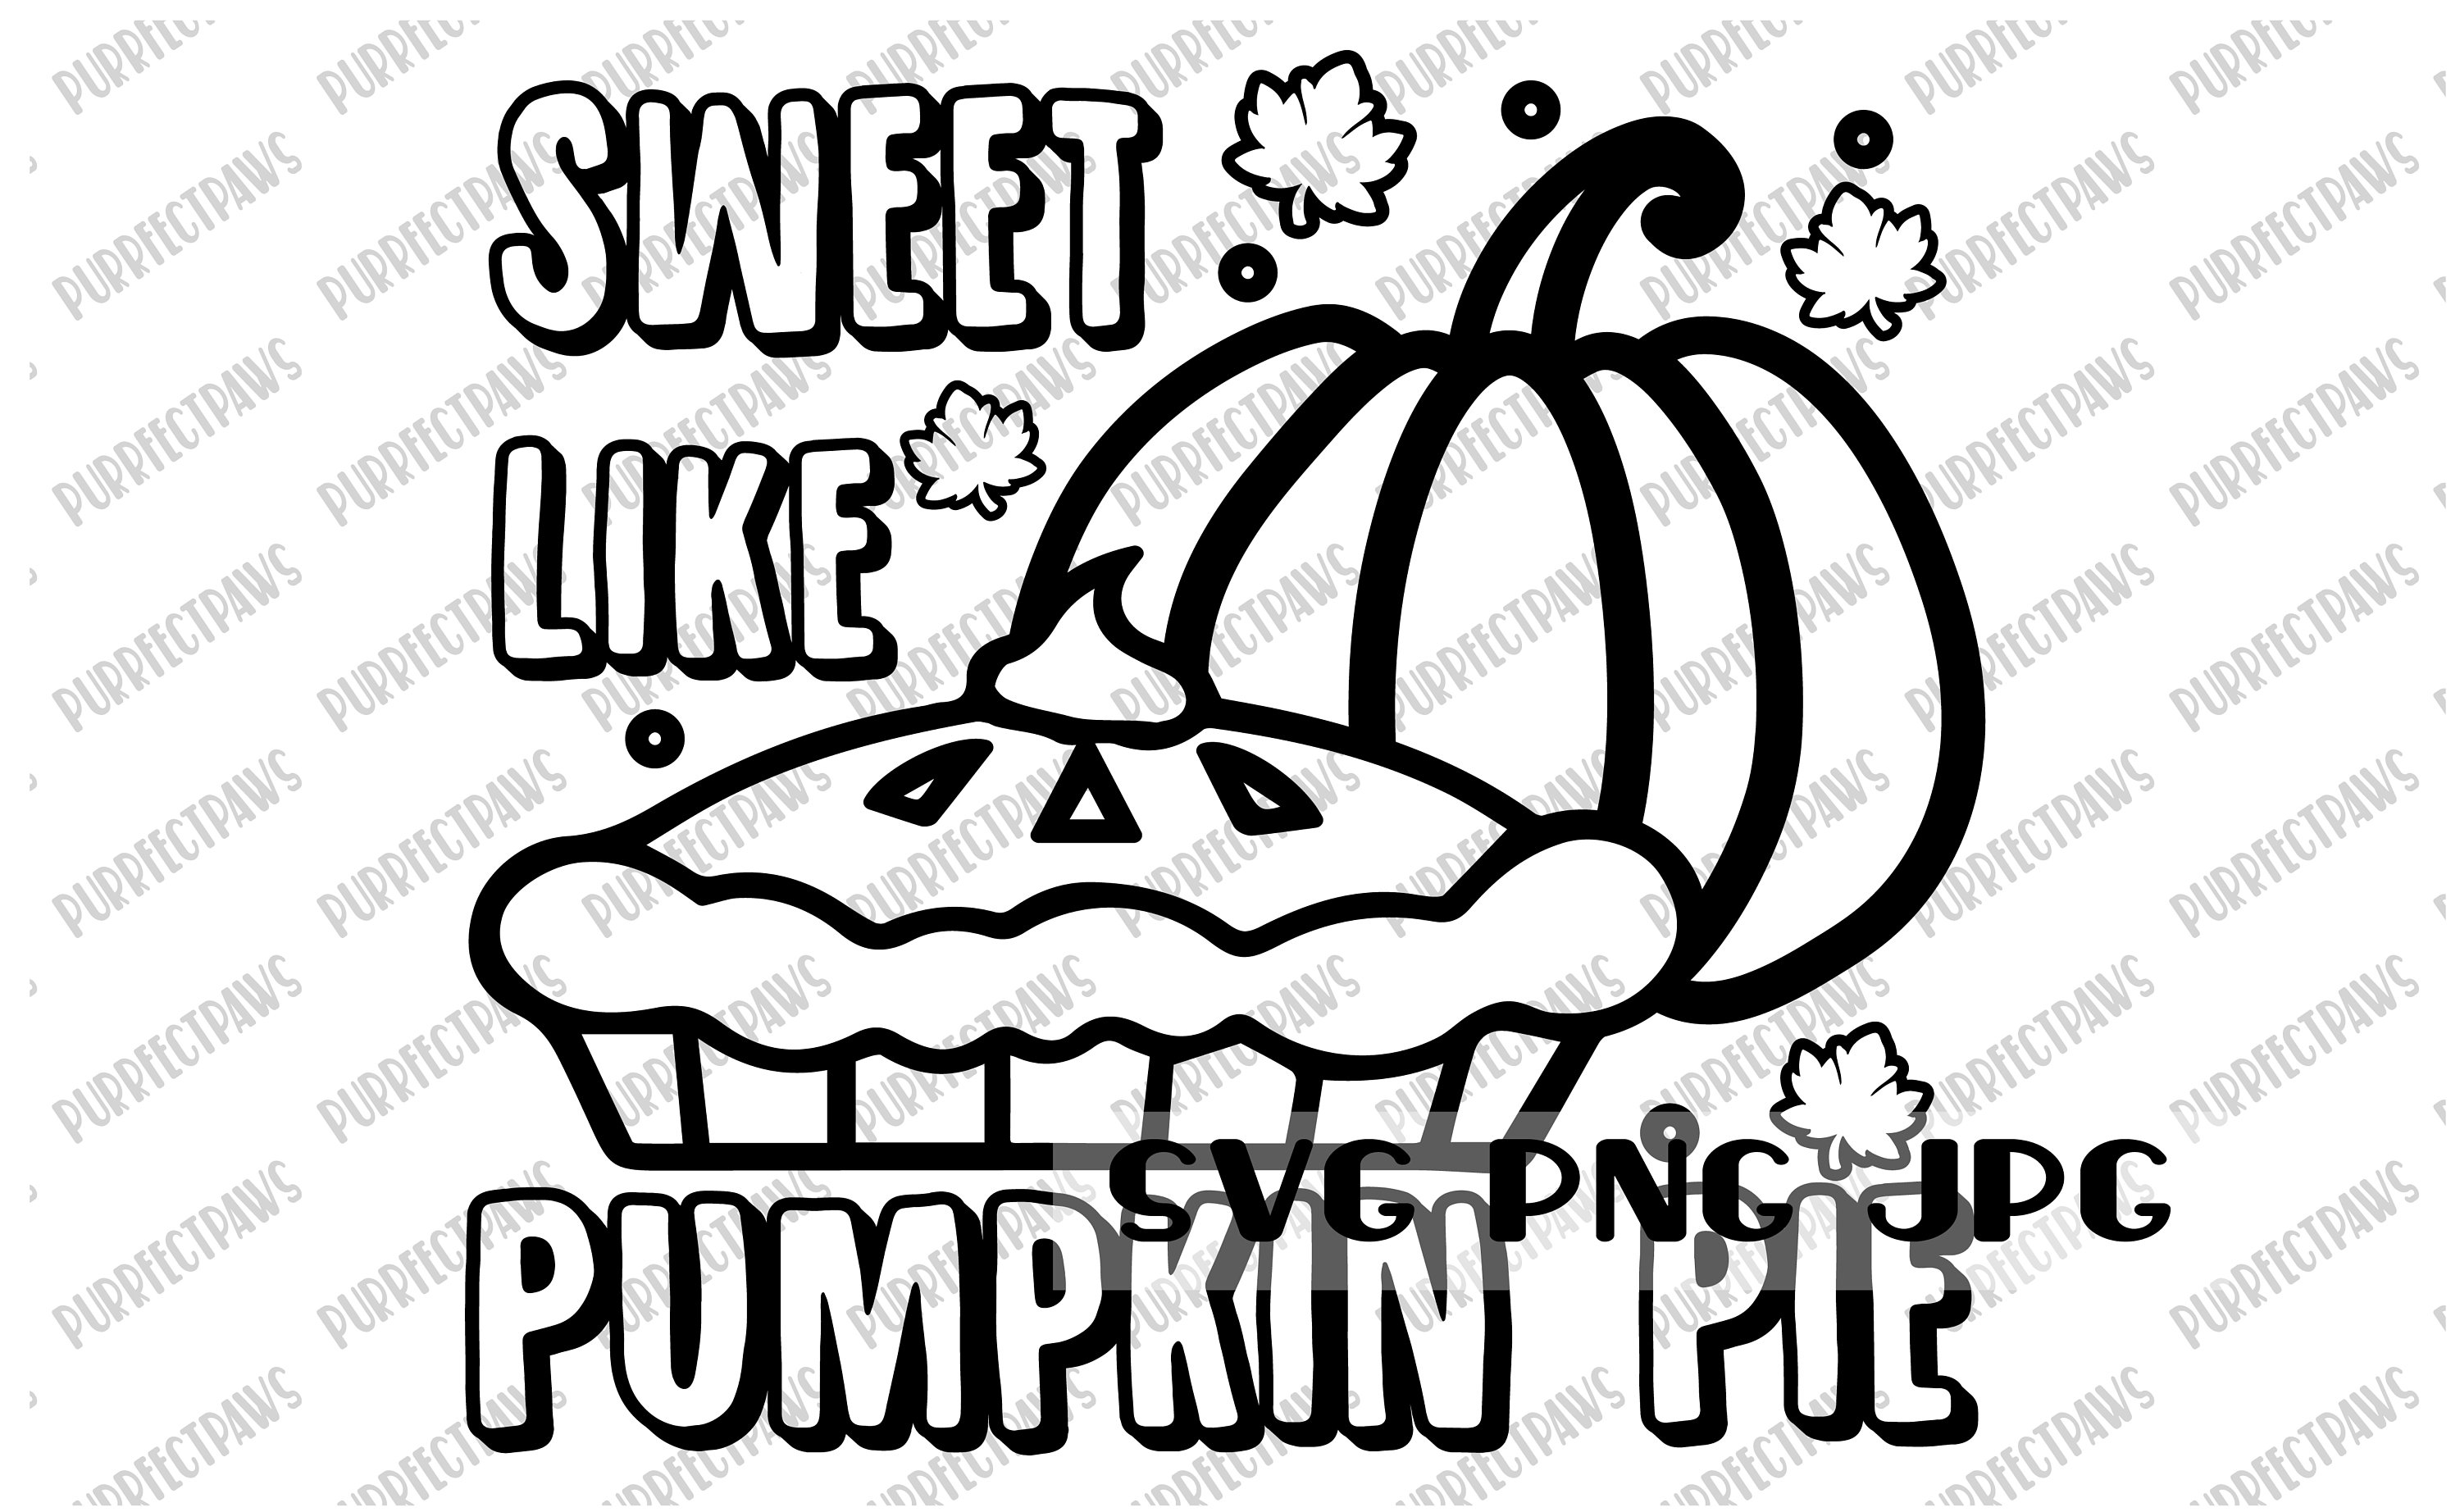 Sweet like pumpkin pie coloring svg thanksgiving svg autumn fall coloring page coloring tshirt design cut file sublimation svg png jpg